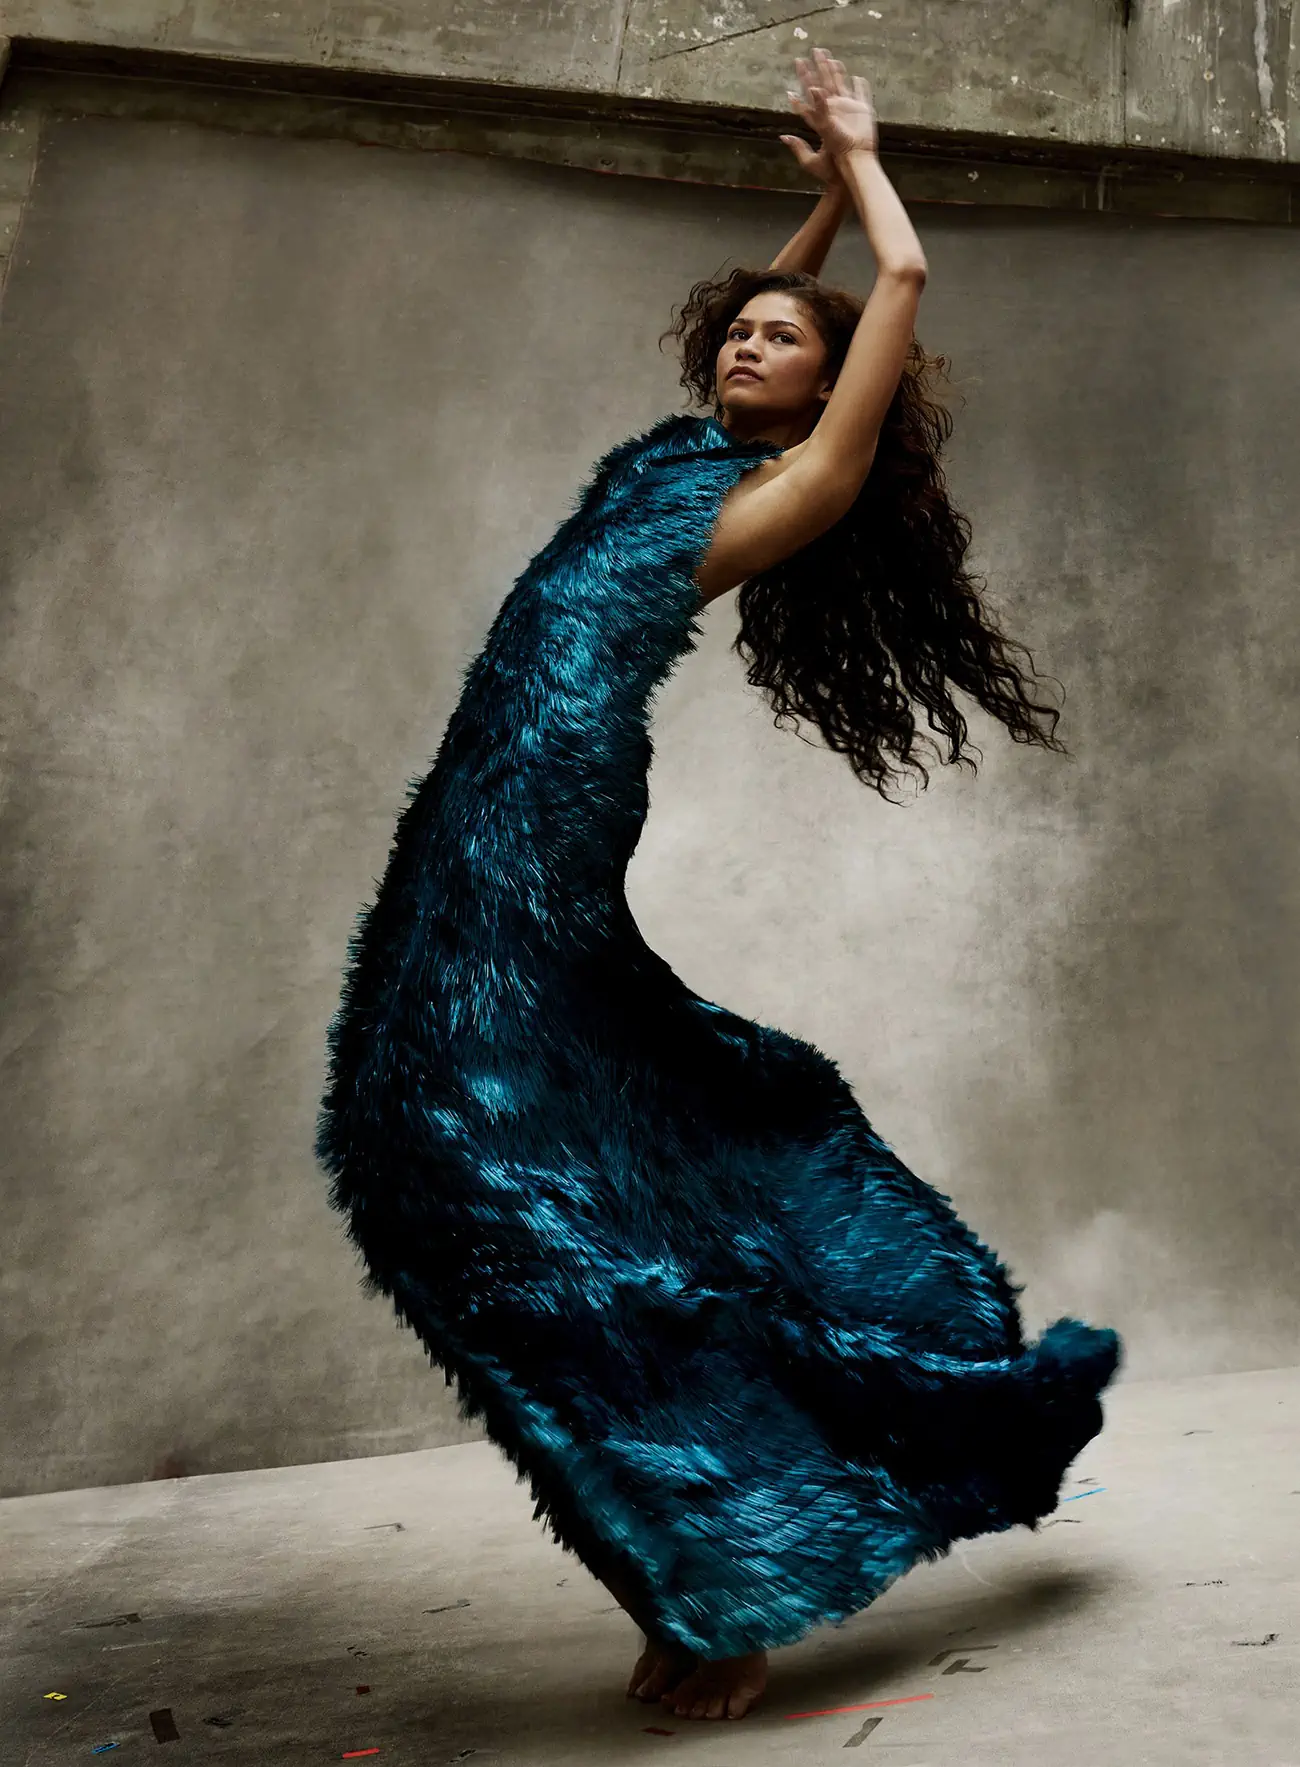 Zendaya covers Vogue US May 2024 by Annie Leibovitz